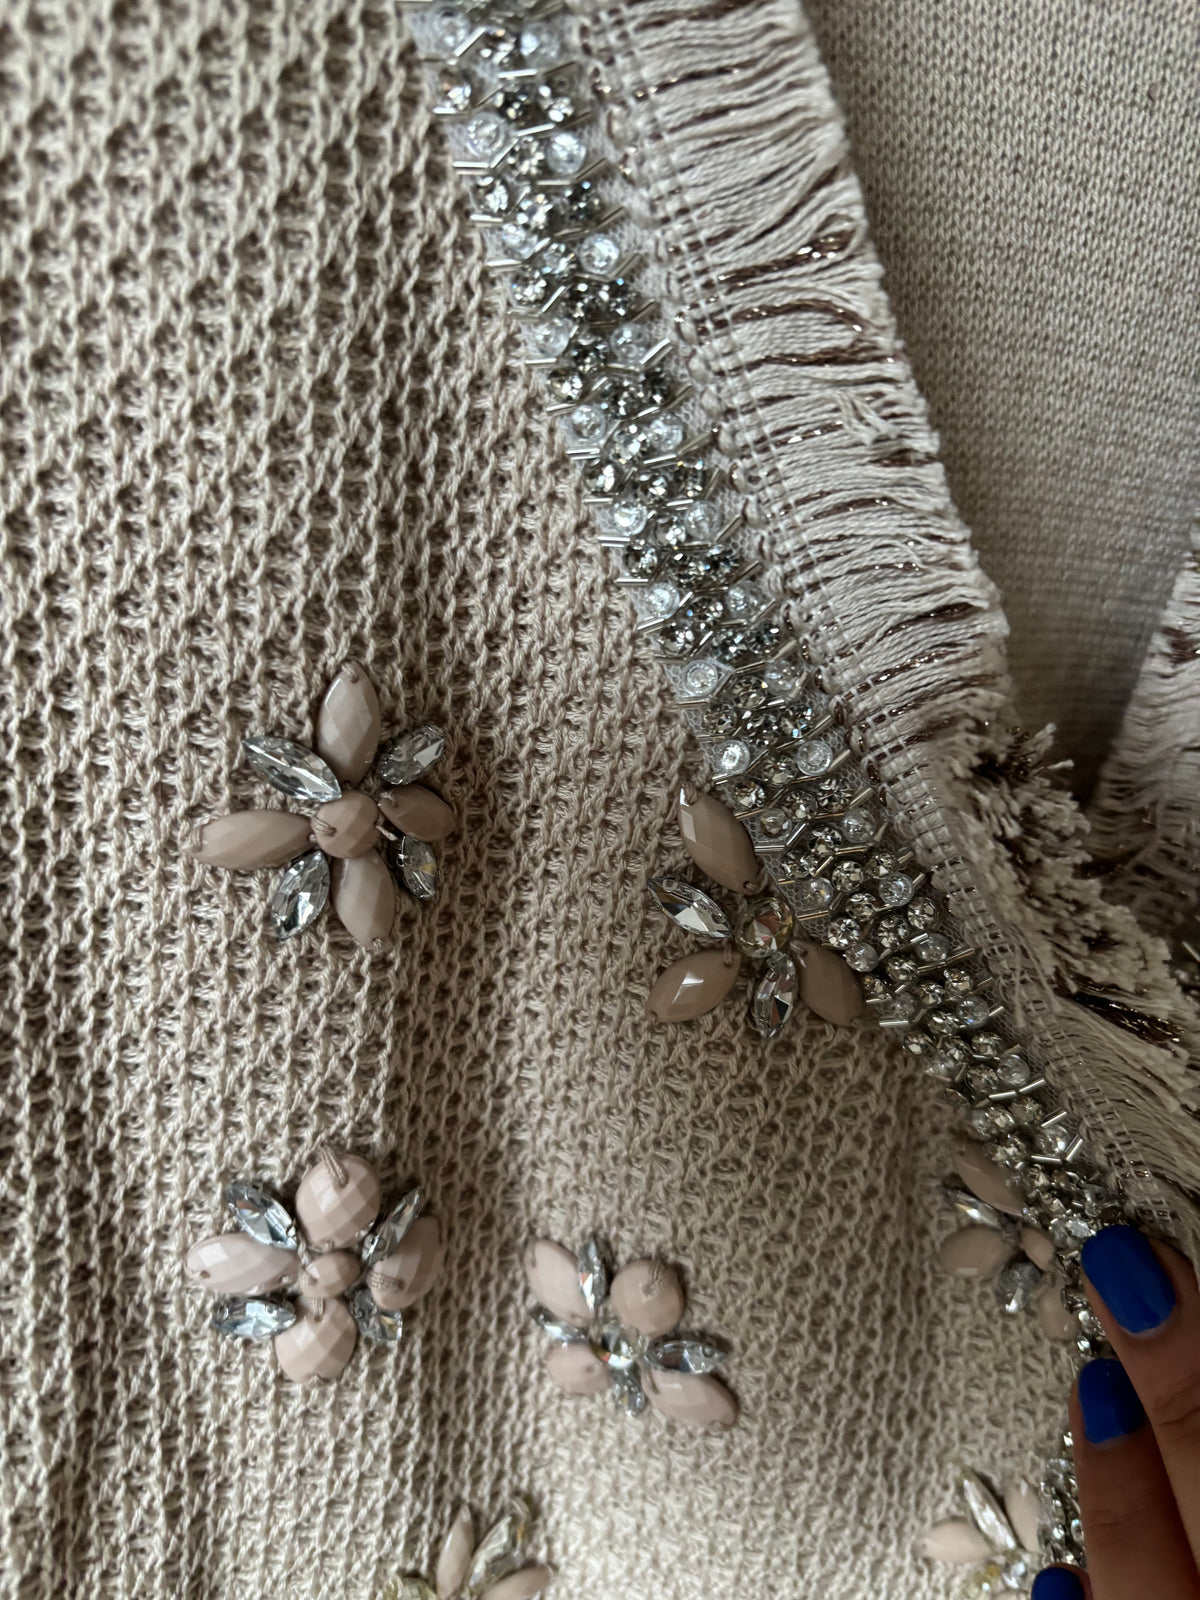 Knit cardigan by Ashley Brookes - size 18